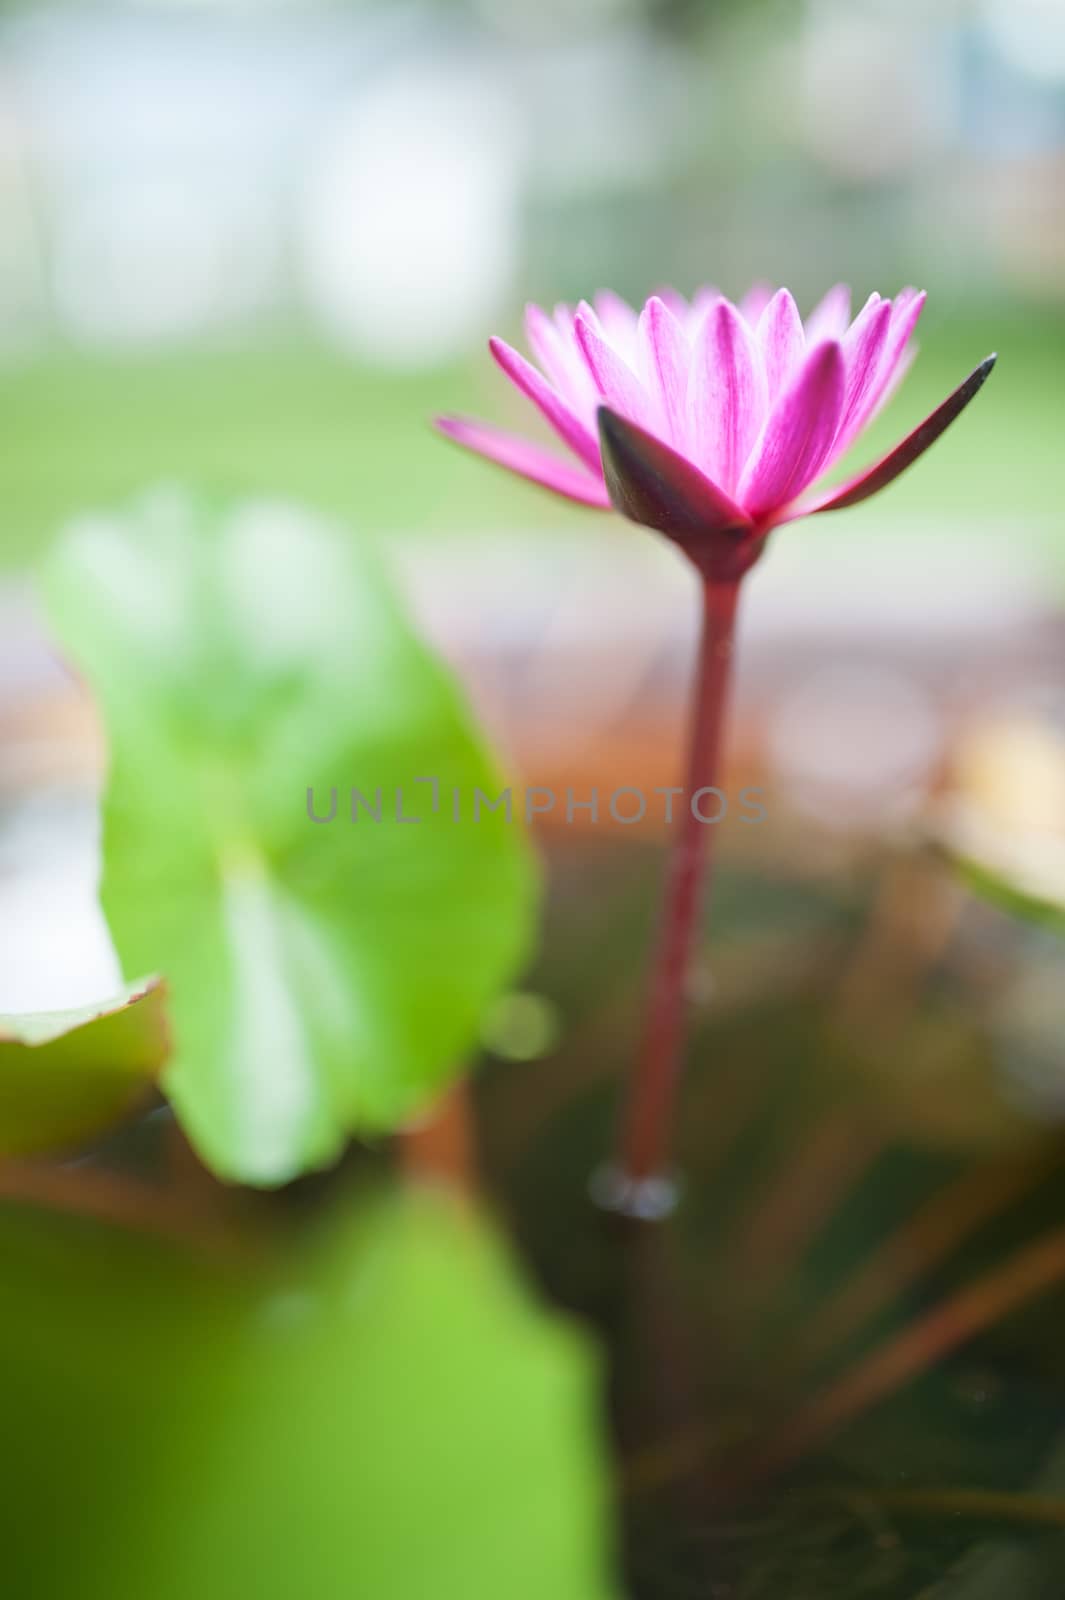 Lotus in nature pool in sun light by panumazz@gmail.com